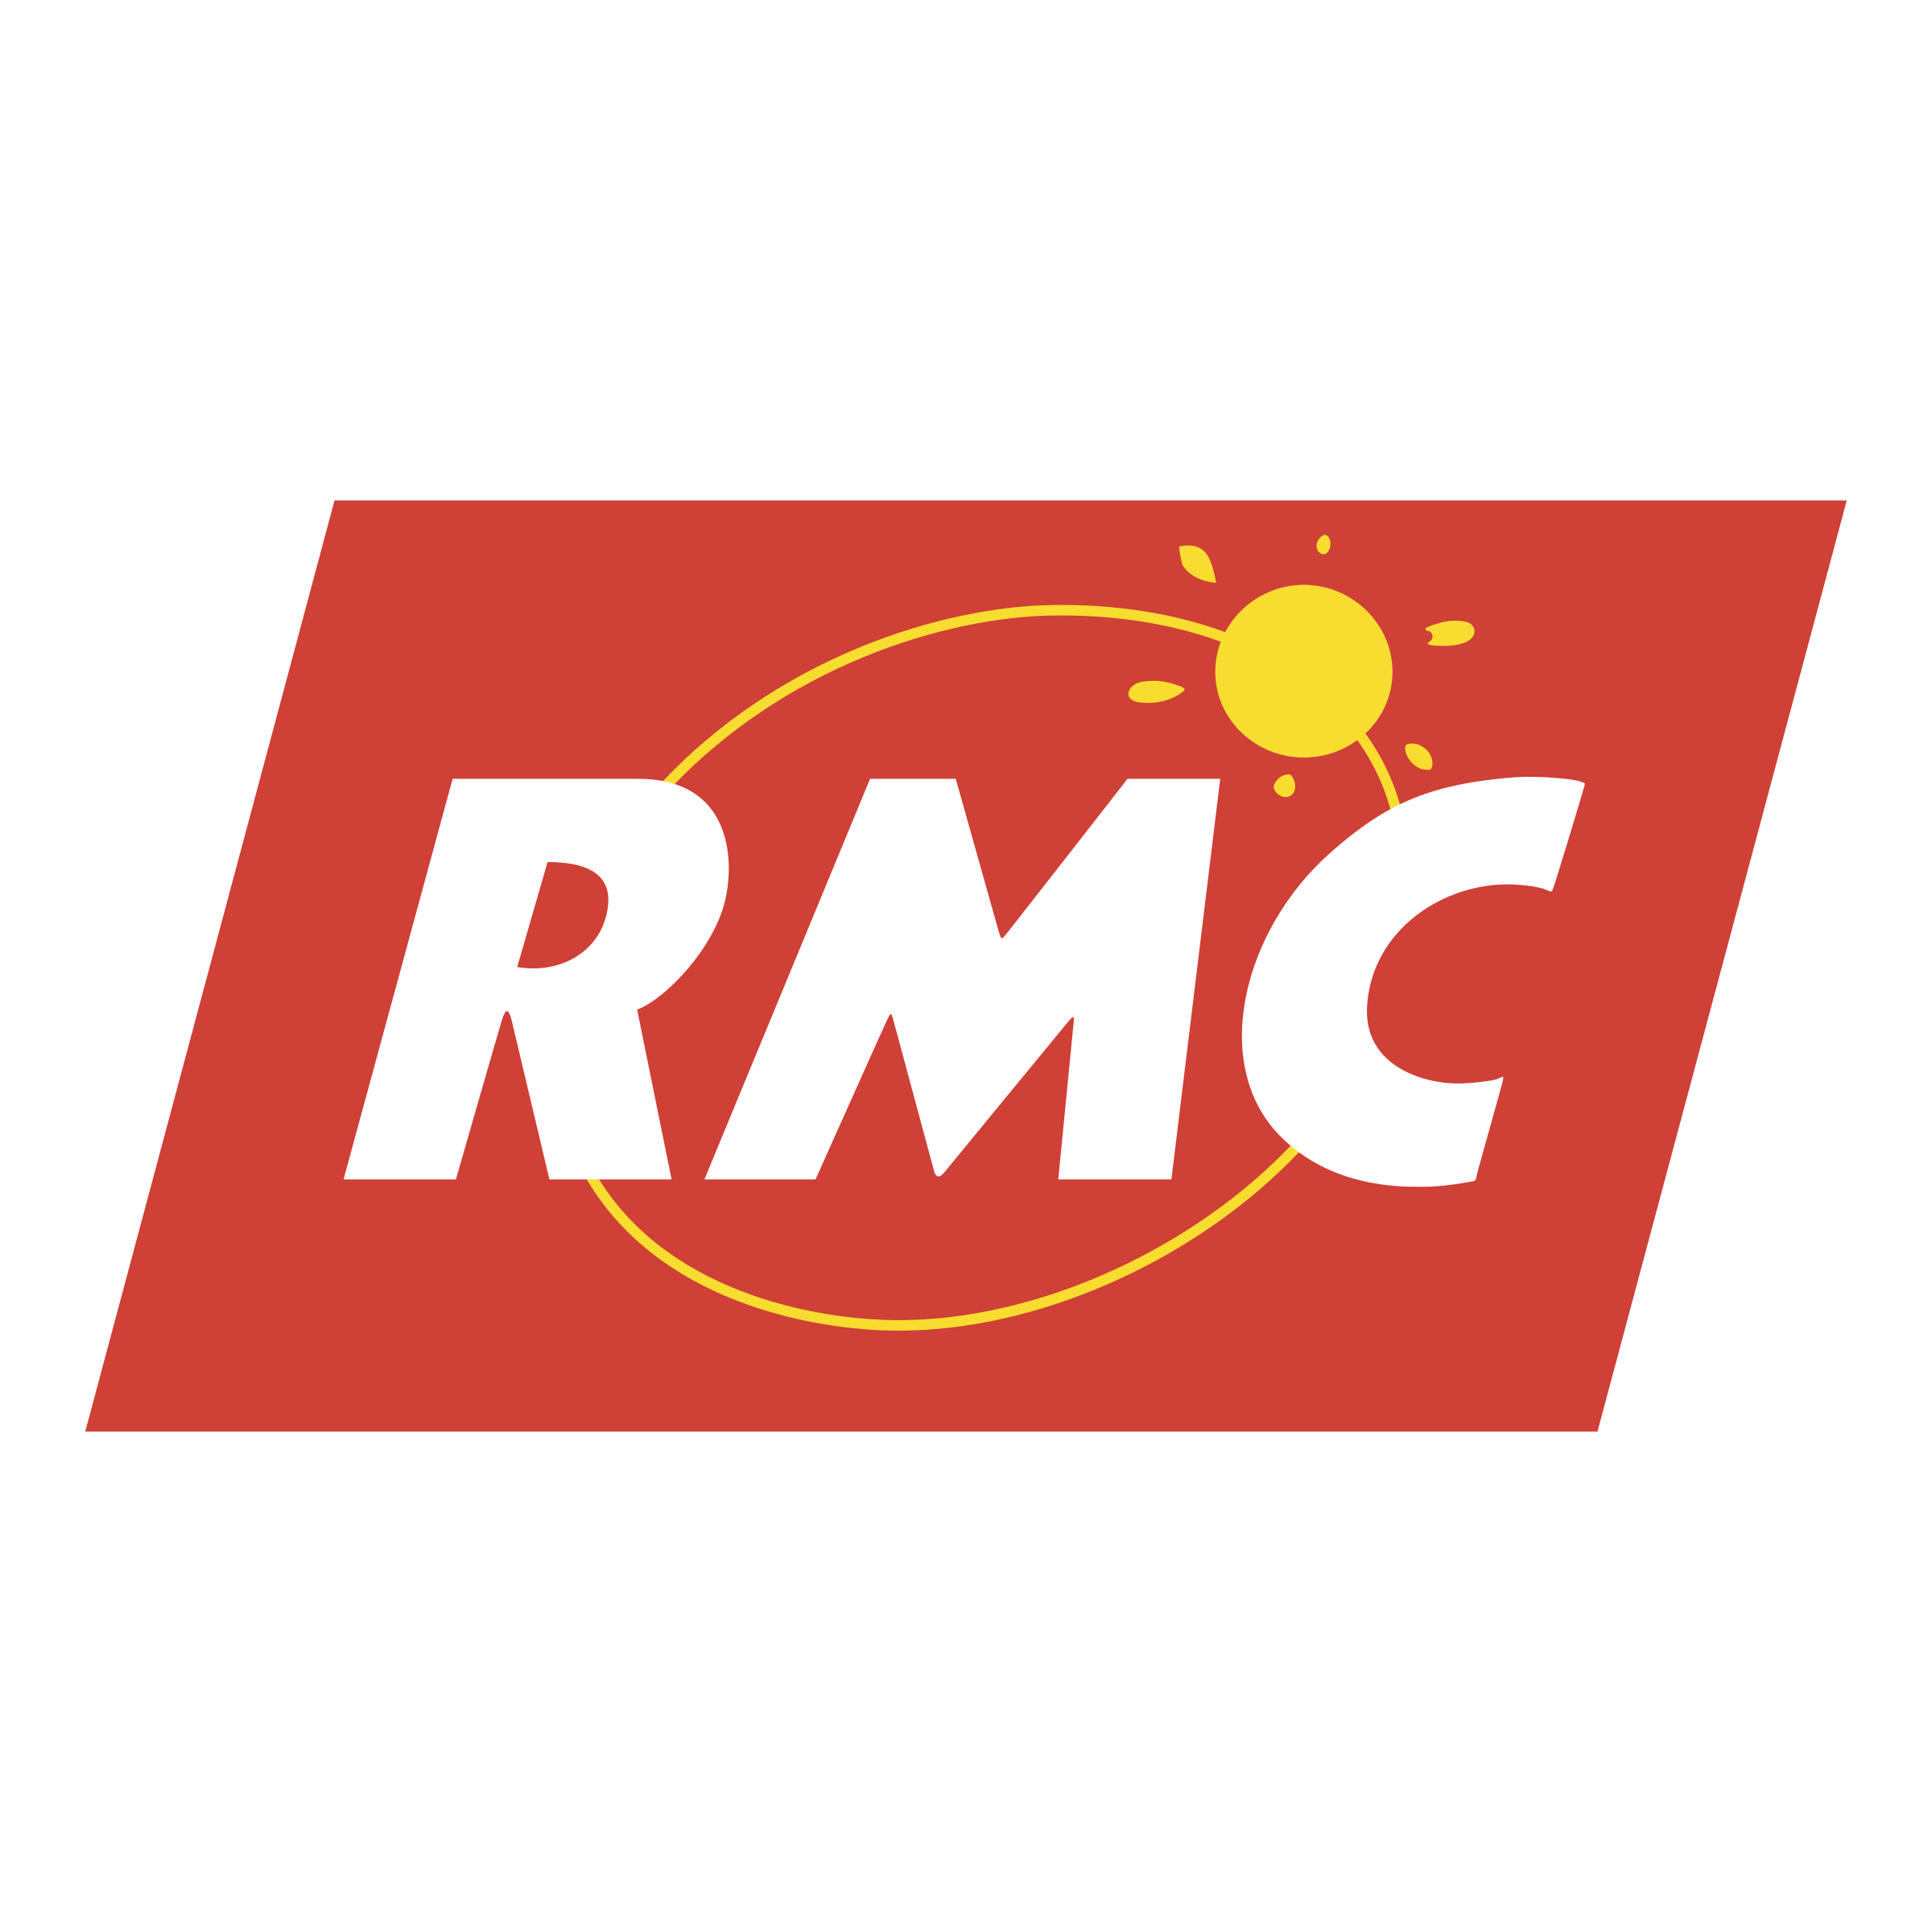 RMC Logo - RMC Logo PNG Transparent & SVG Vector - Freebie Supply